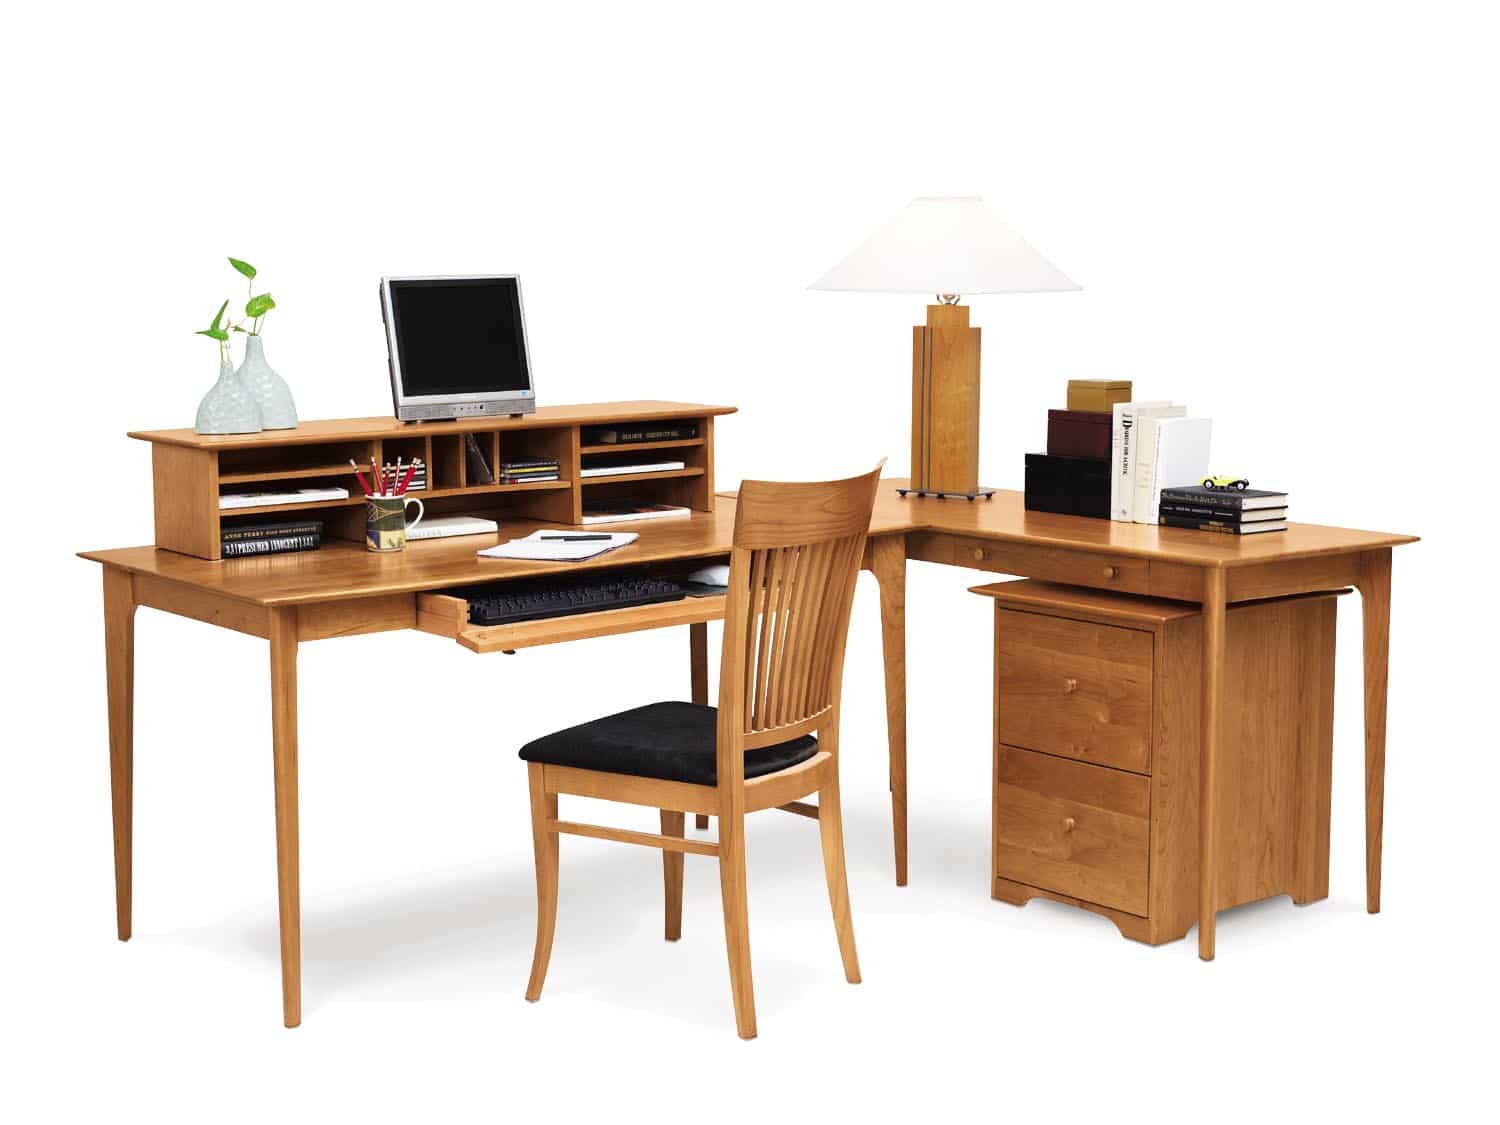 copeland, sarah, desk, circle furniture, home office